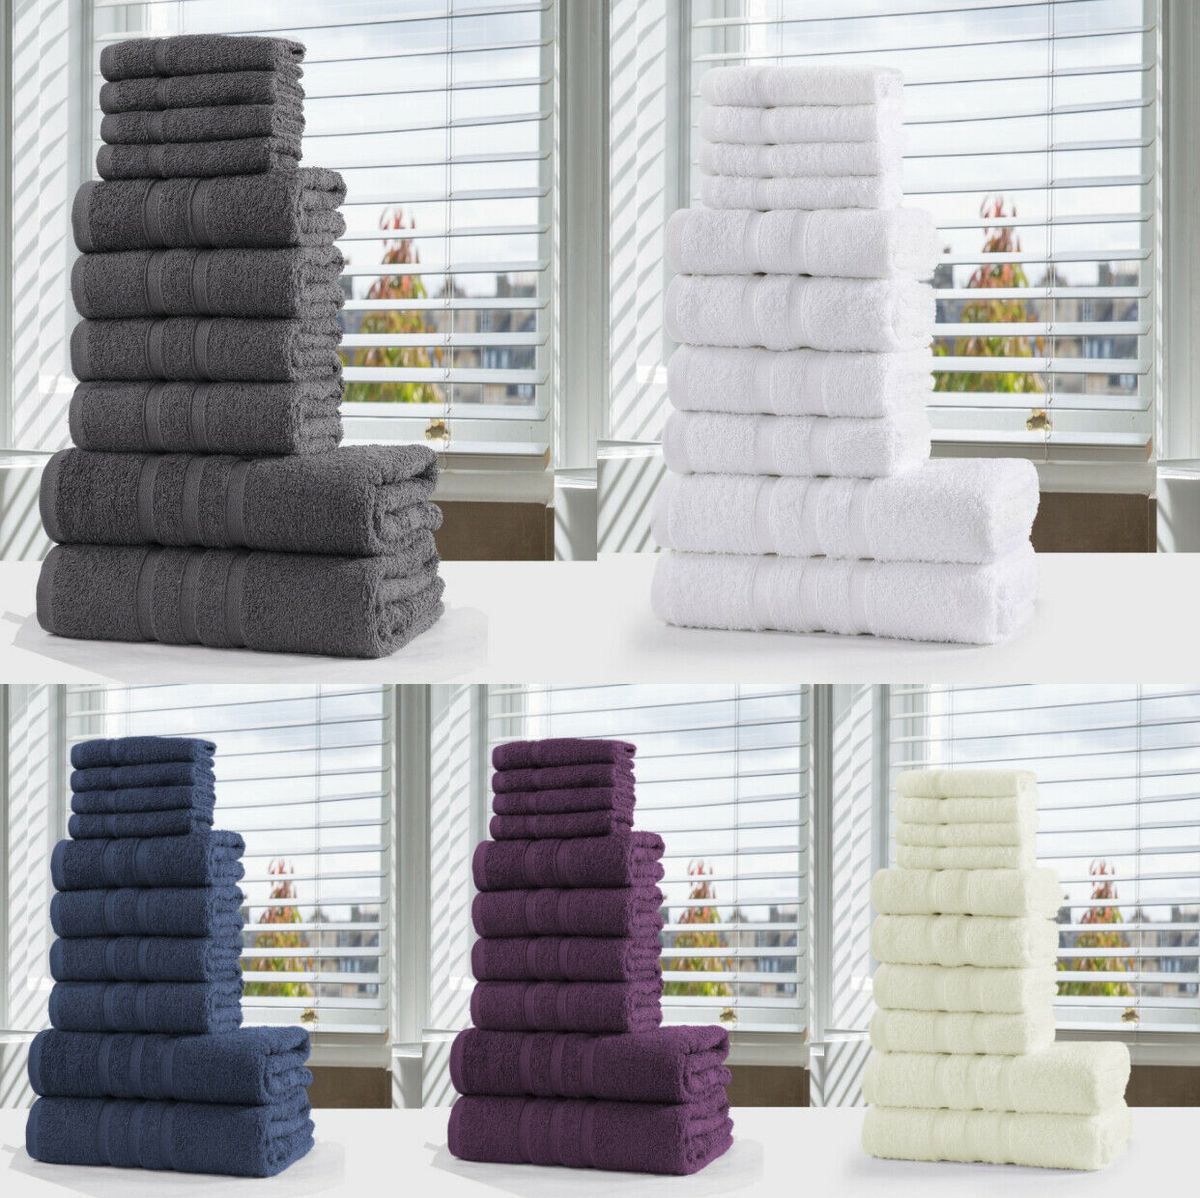 700 GSM Premium Hand Towels - British Wholesales